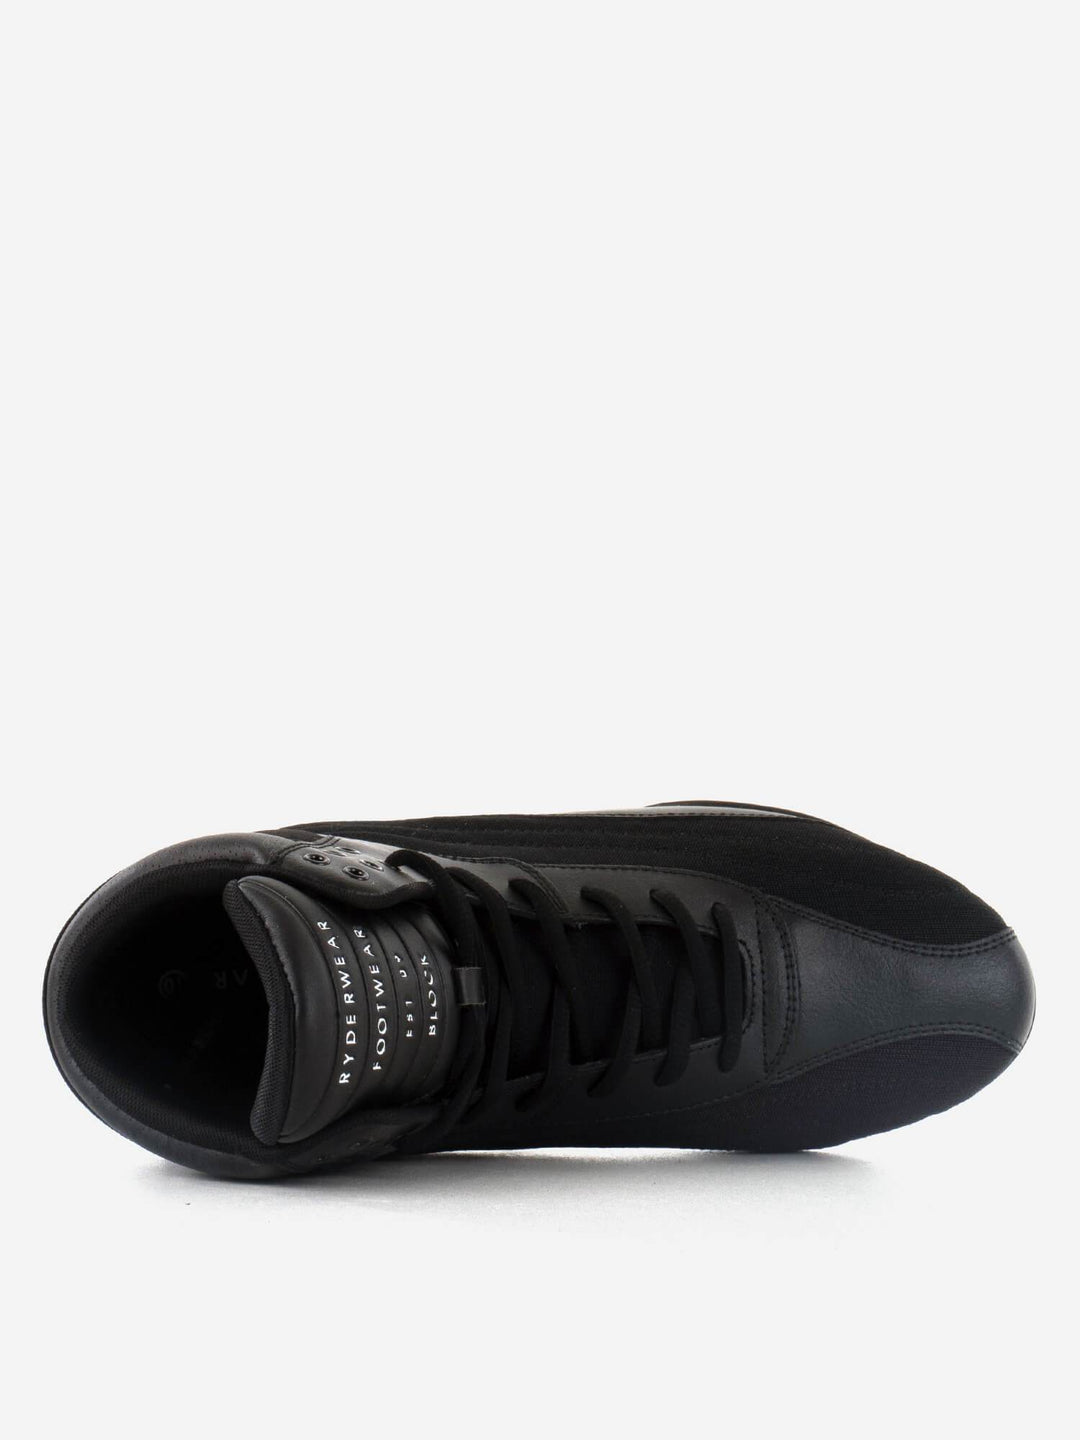 D-Mak Block - Black Shoes Ryderwear 